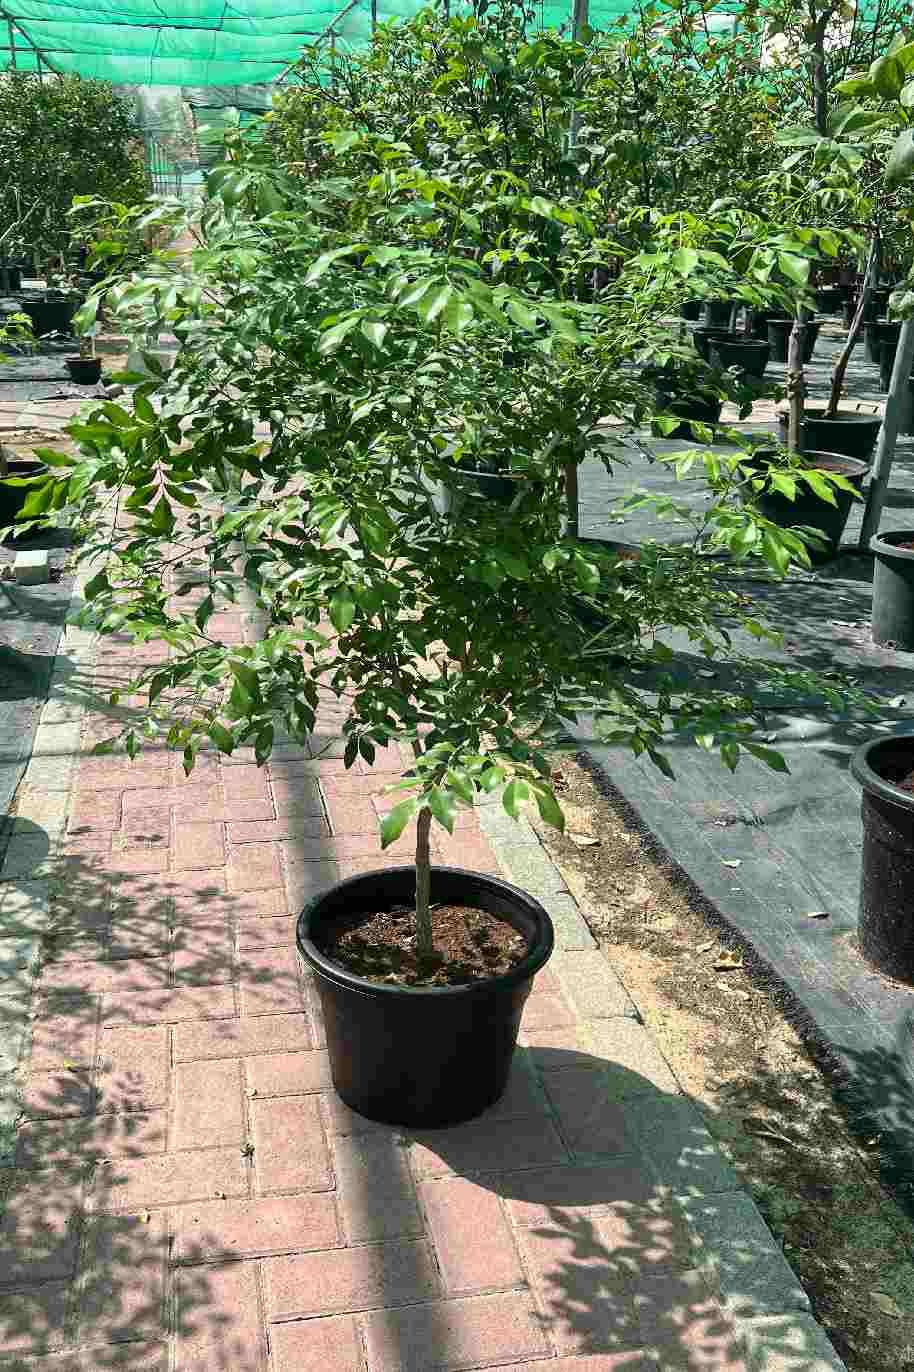 Murraya paniculata “Orange or Thai Jasmine” Tall